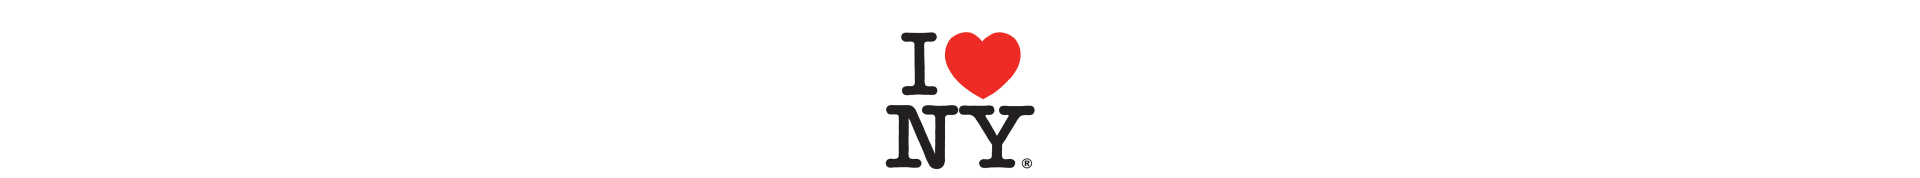 Sponsored by I Love New York